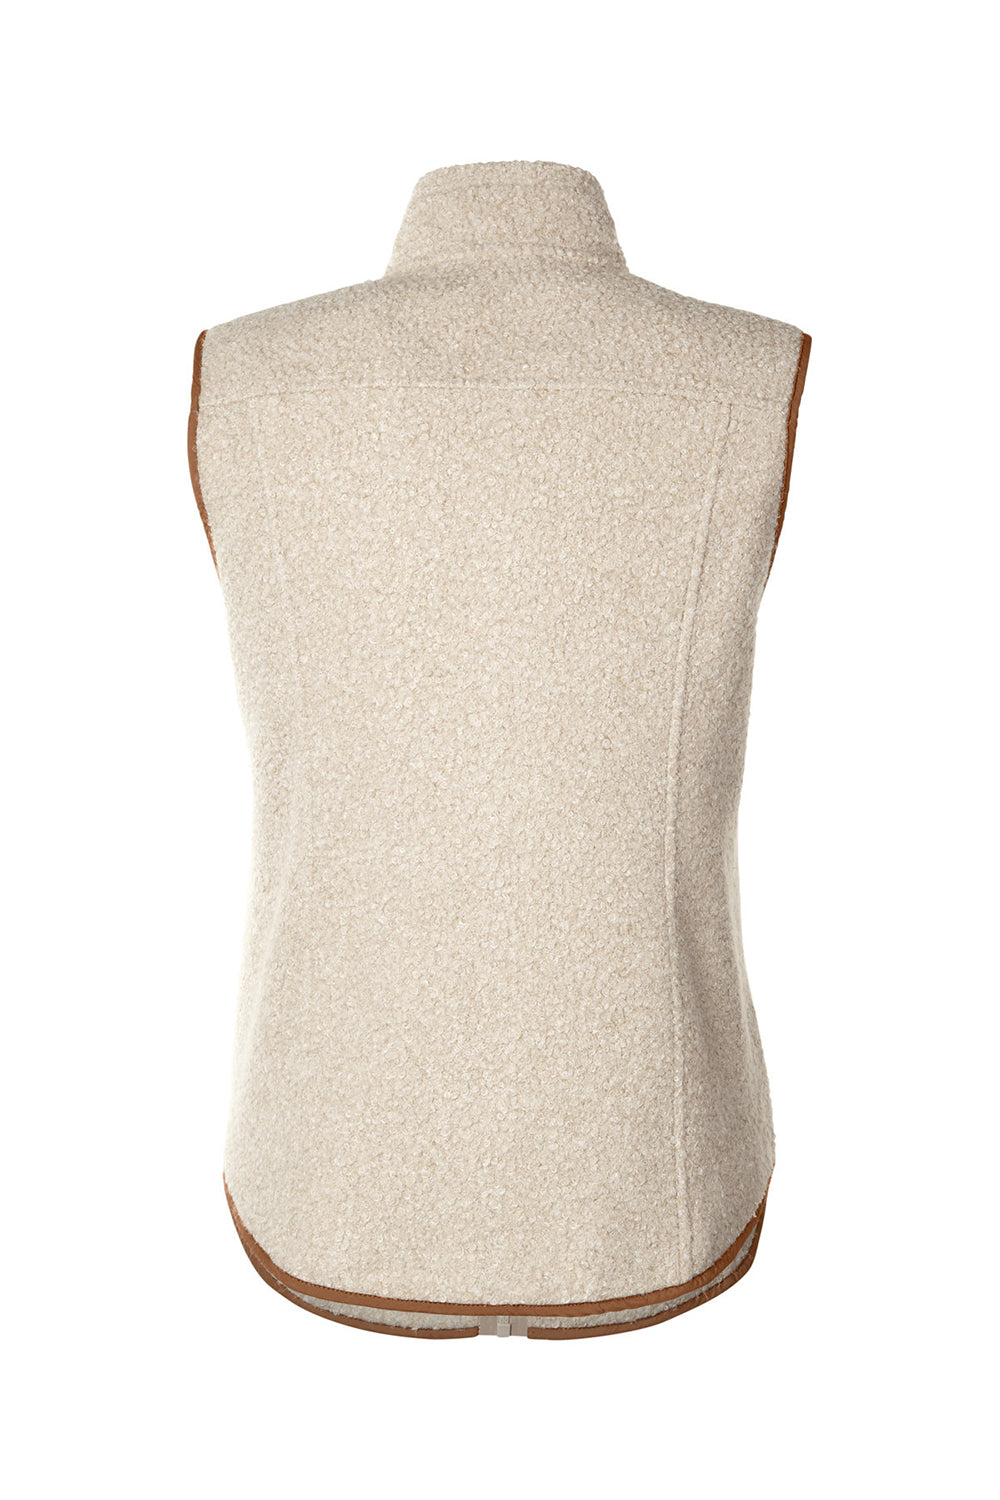 North End NE714W Womens Aura Sweater Fleece Full Zip Vest Heather Oatmeal/Teak Flat Back